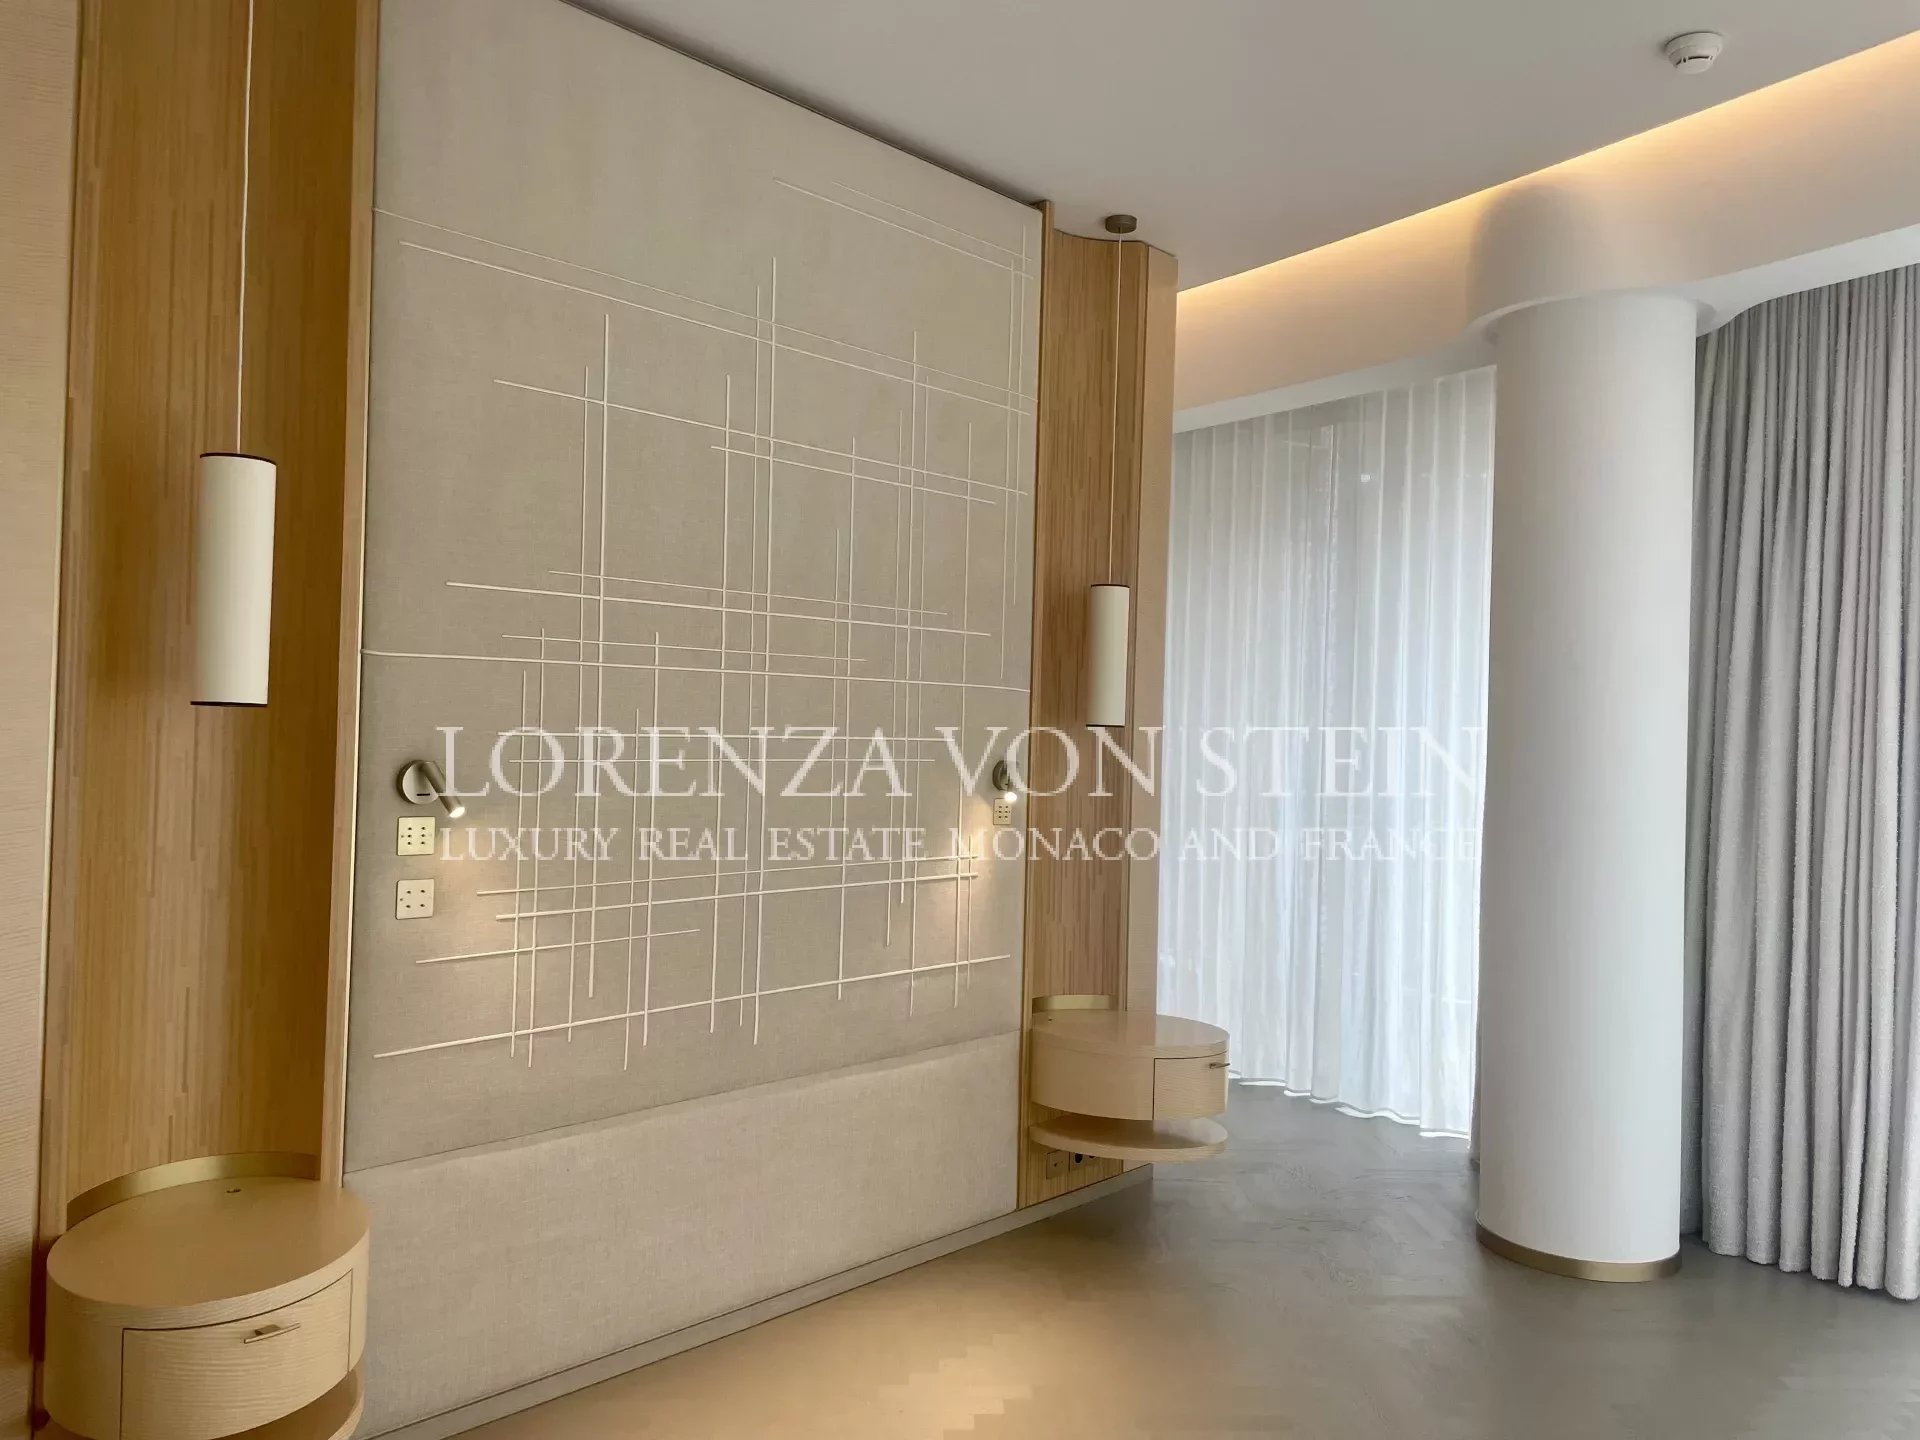 One Monte Carlo - Luxurious 2 bedroom